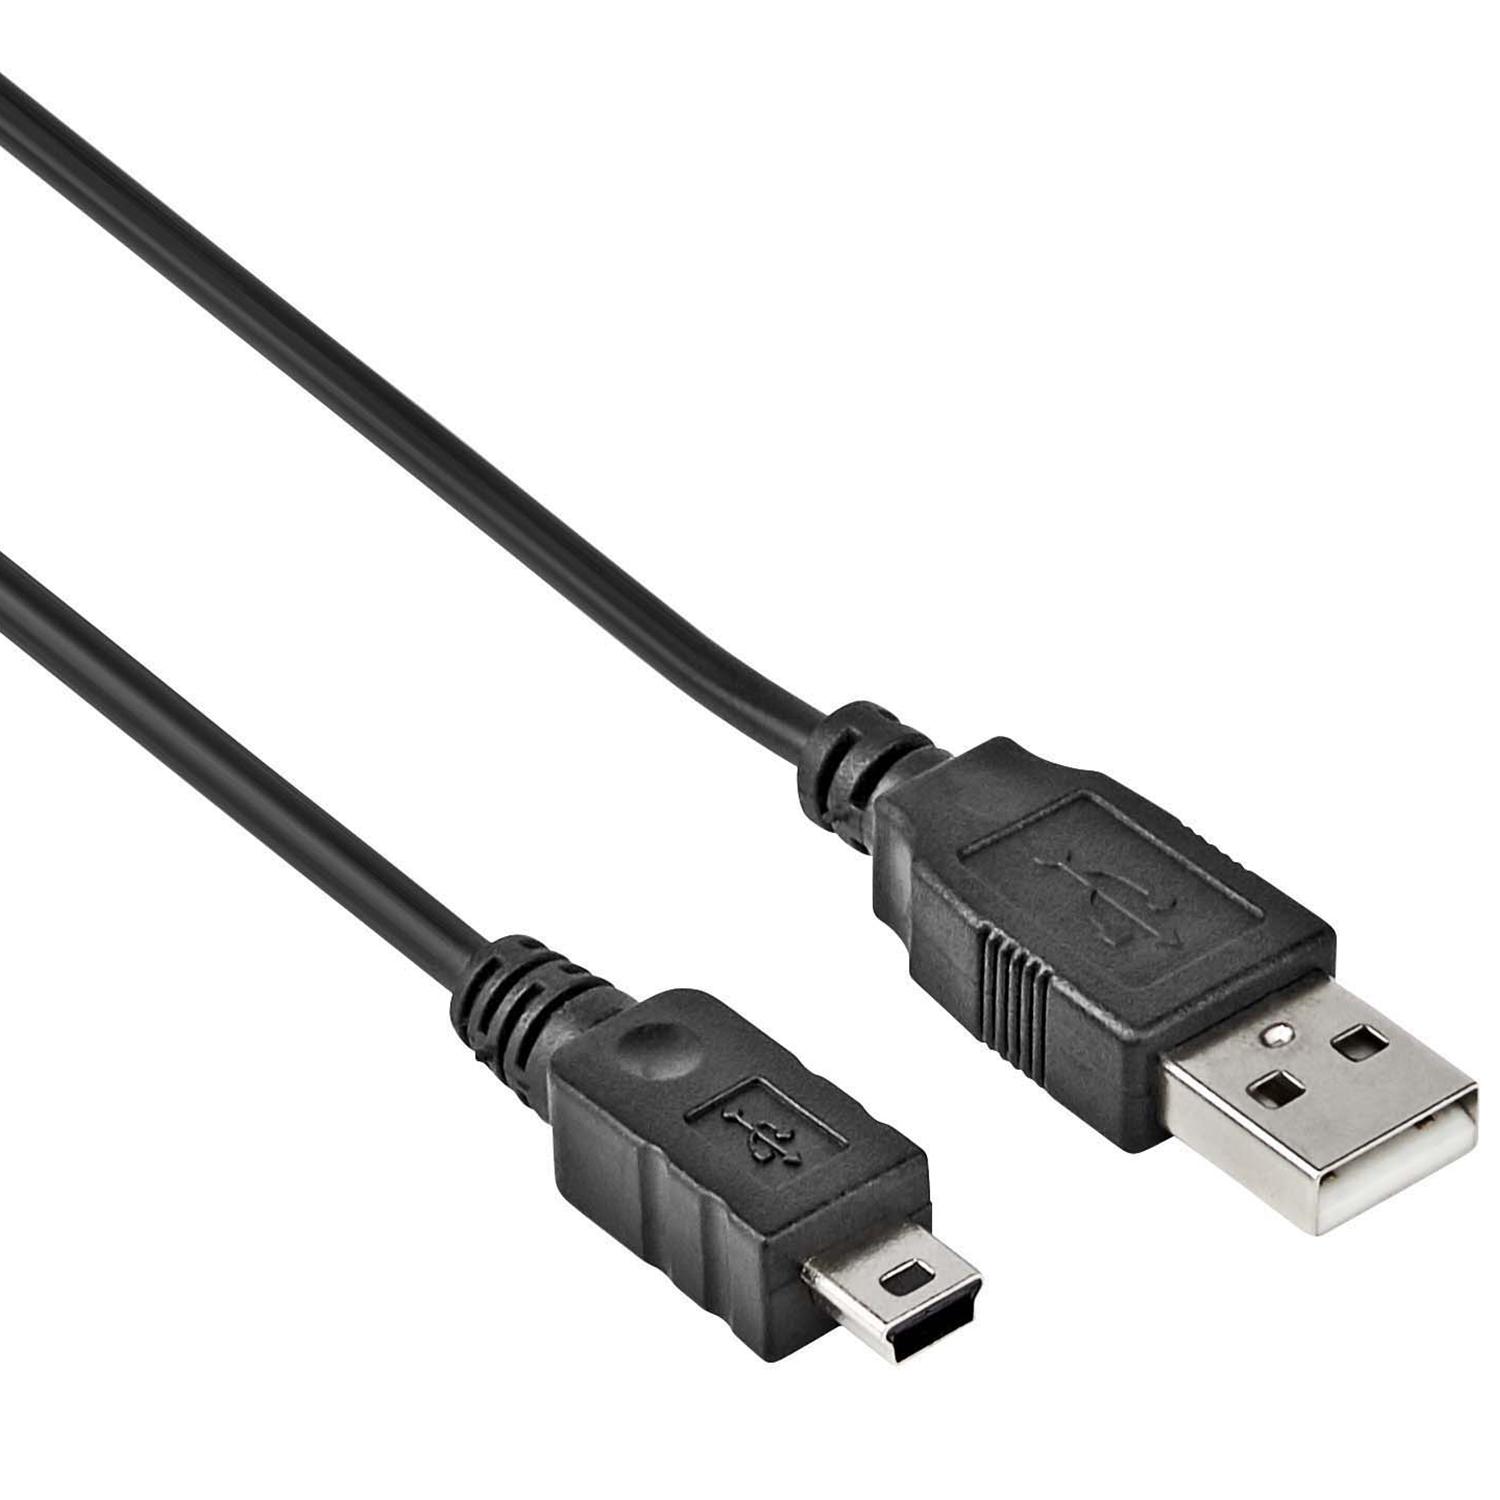 USB navigatie kabel - Allteq